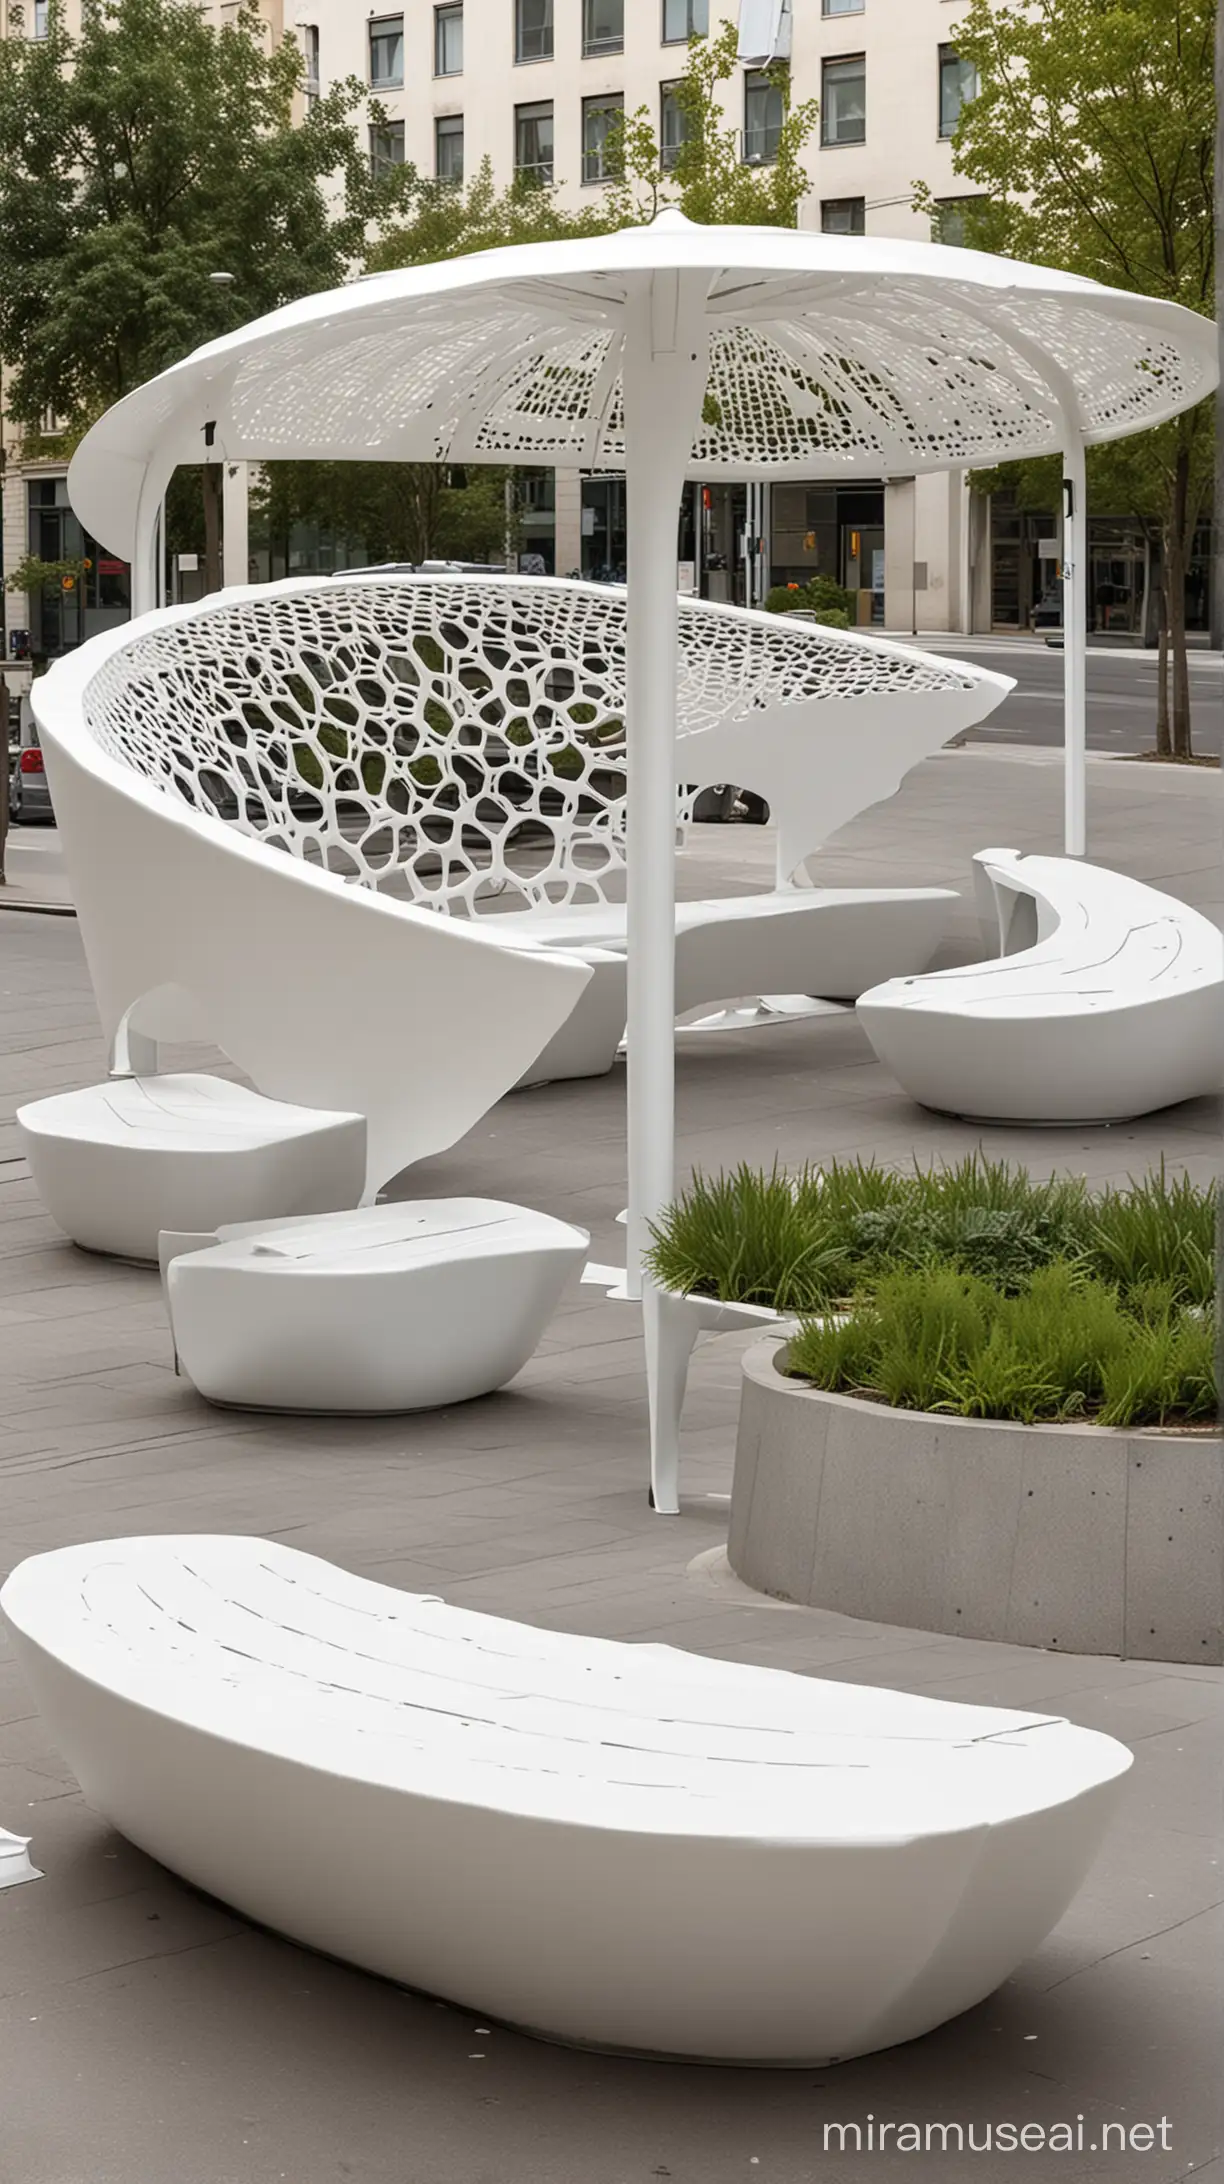 Futuristic Urban Bench with Circular Shade Protection Design